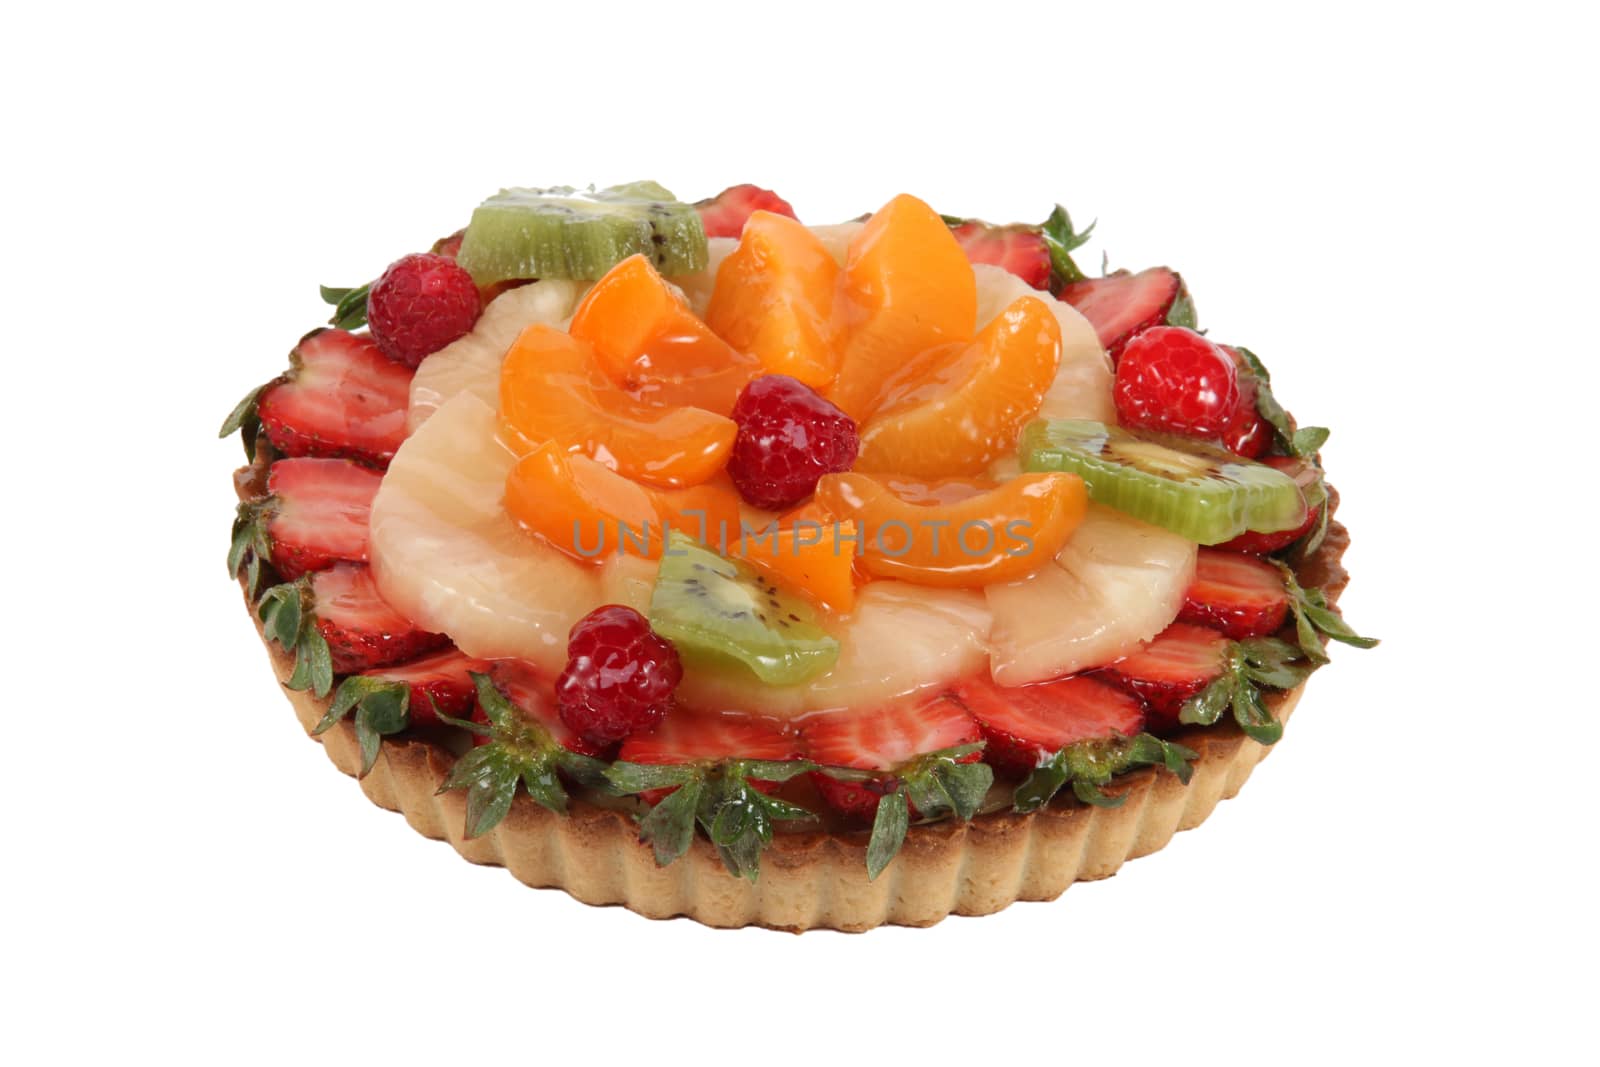 Mixed fruit tart by phovoir